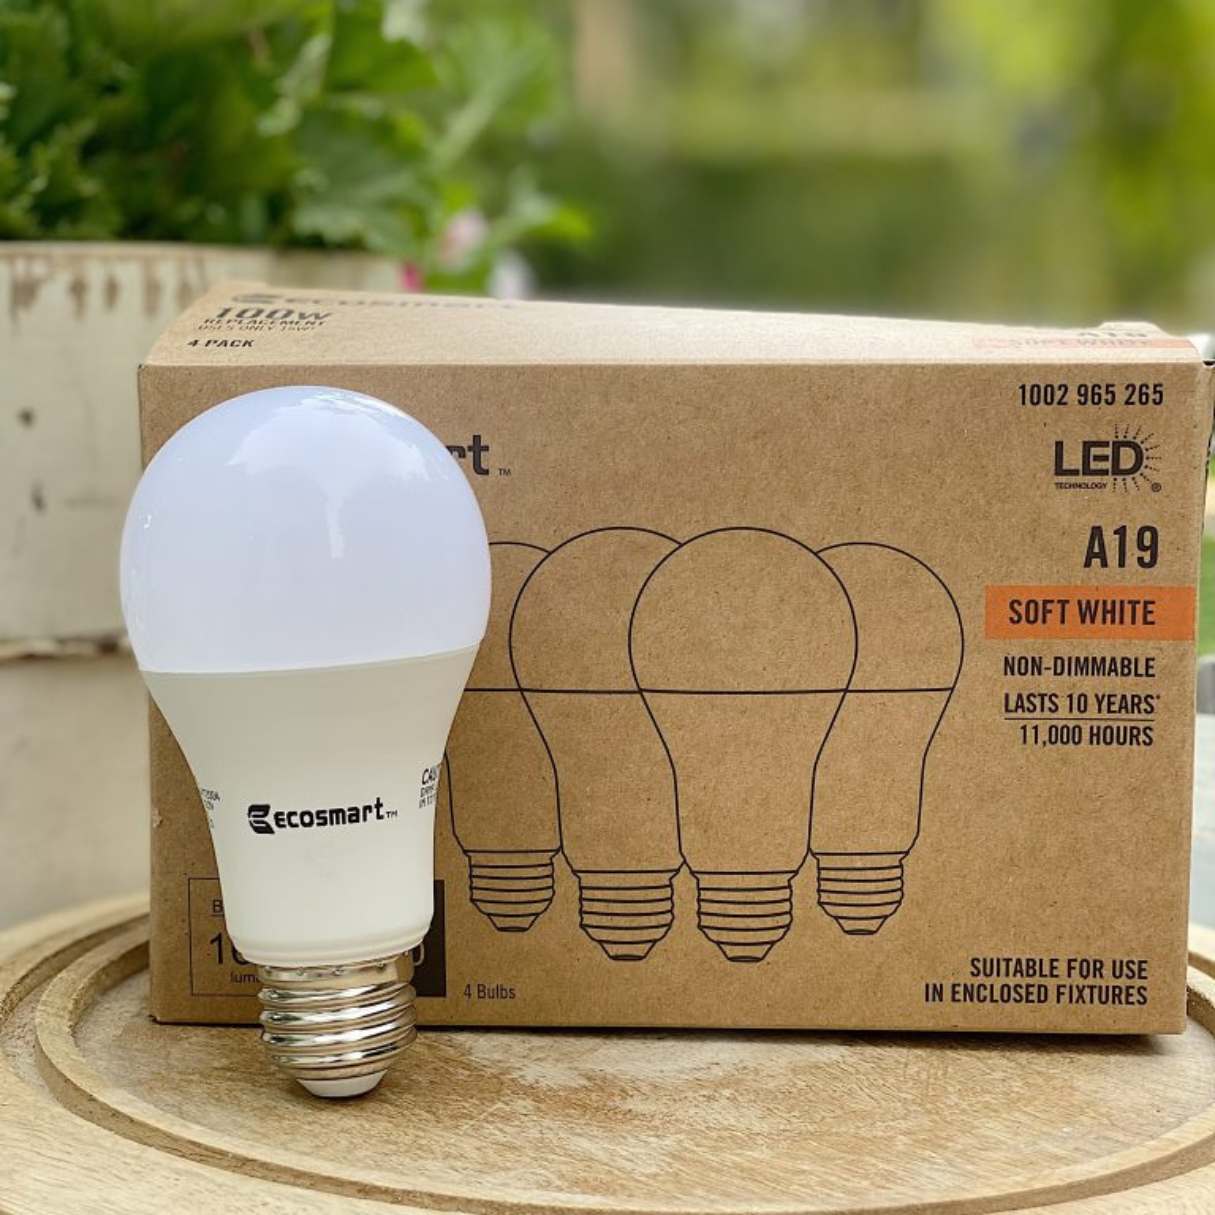 How To Use EcoSmart Light Bulbs With Alexa